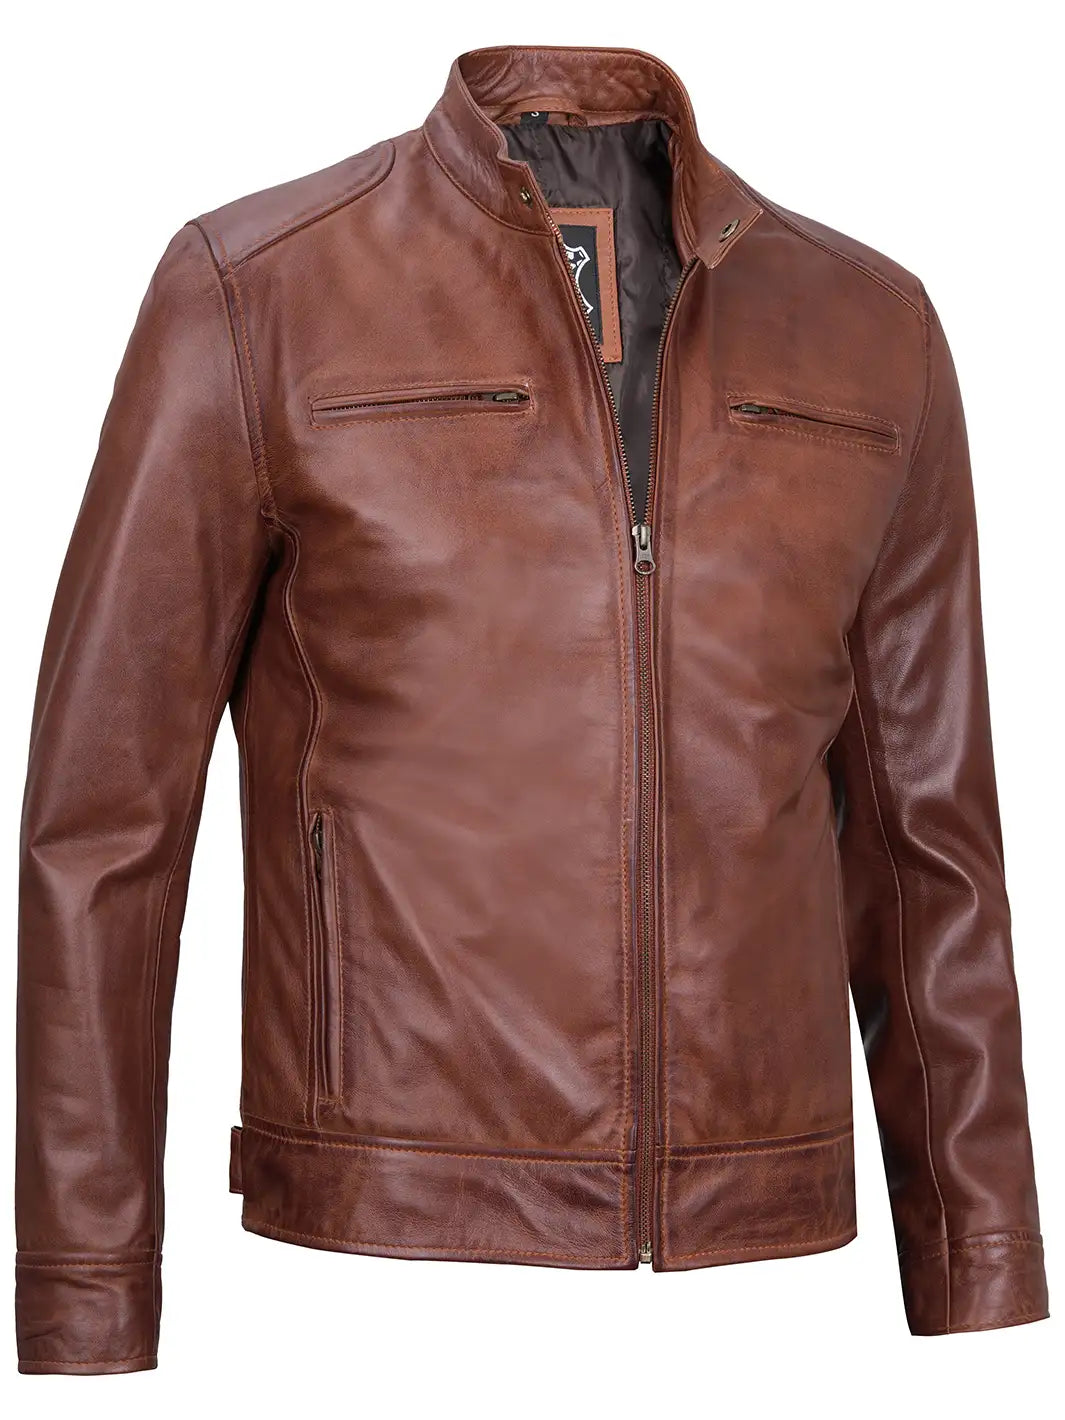 Dodge cognac wax leather jacket